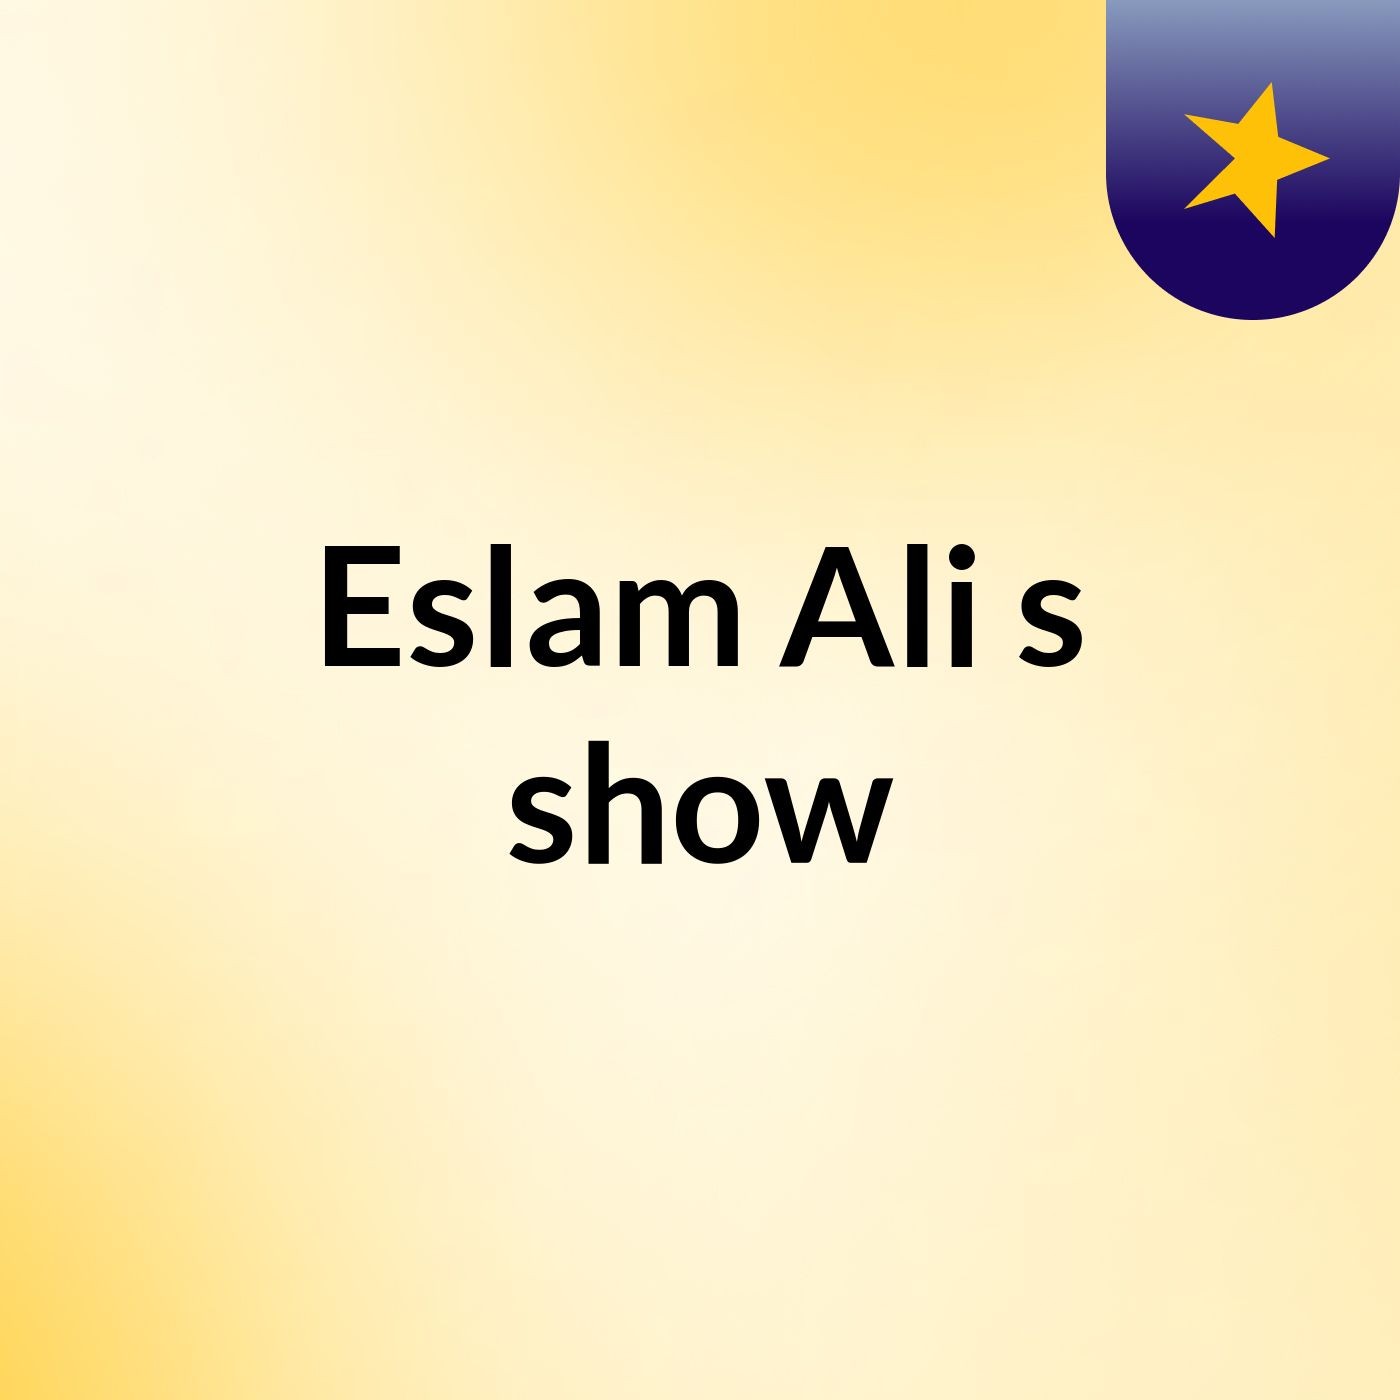 Eslam Ali's show